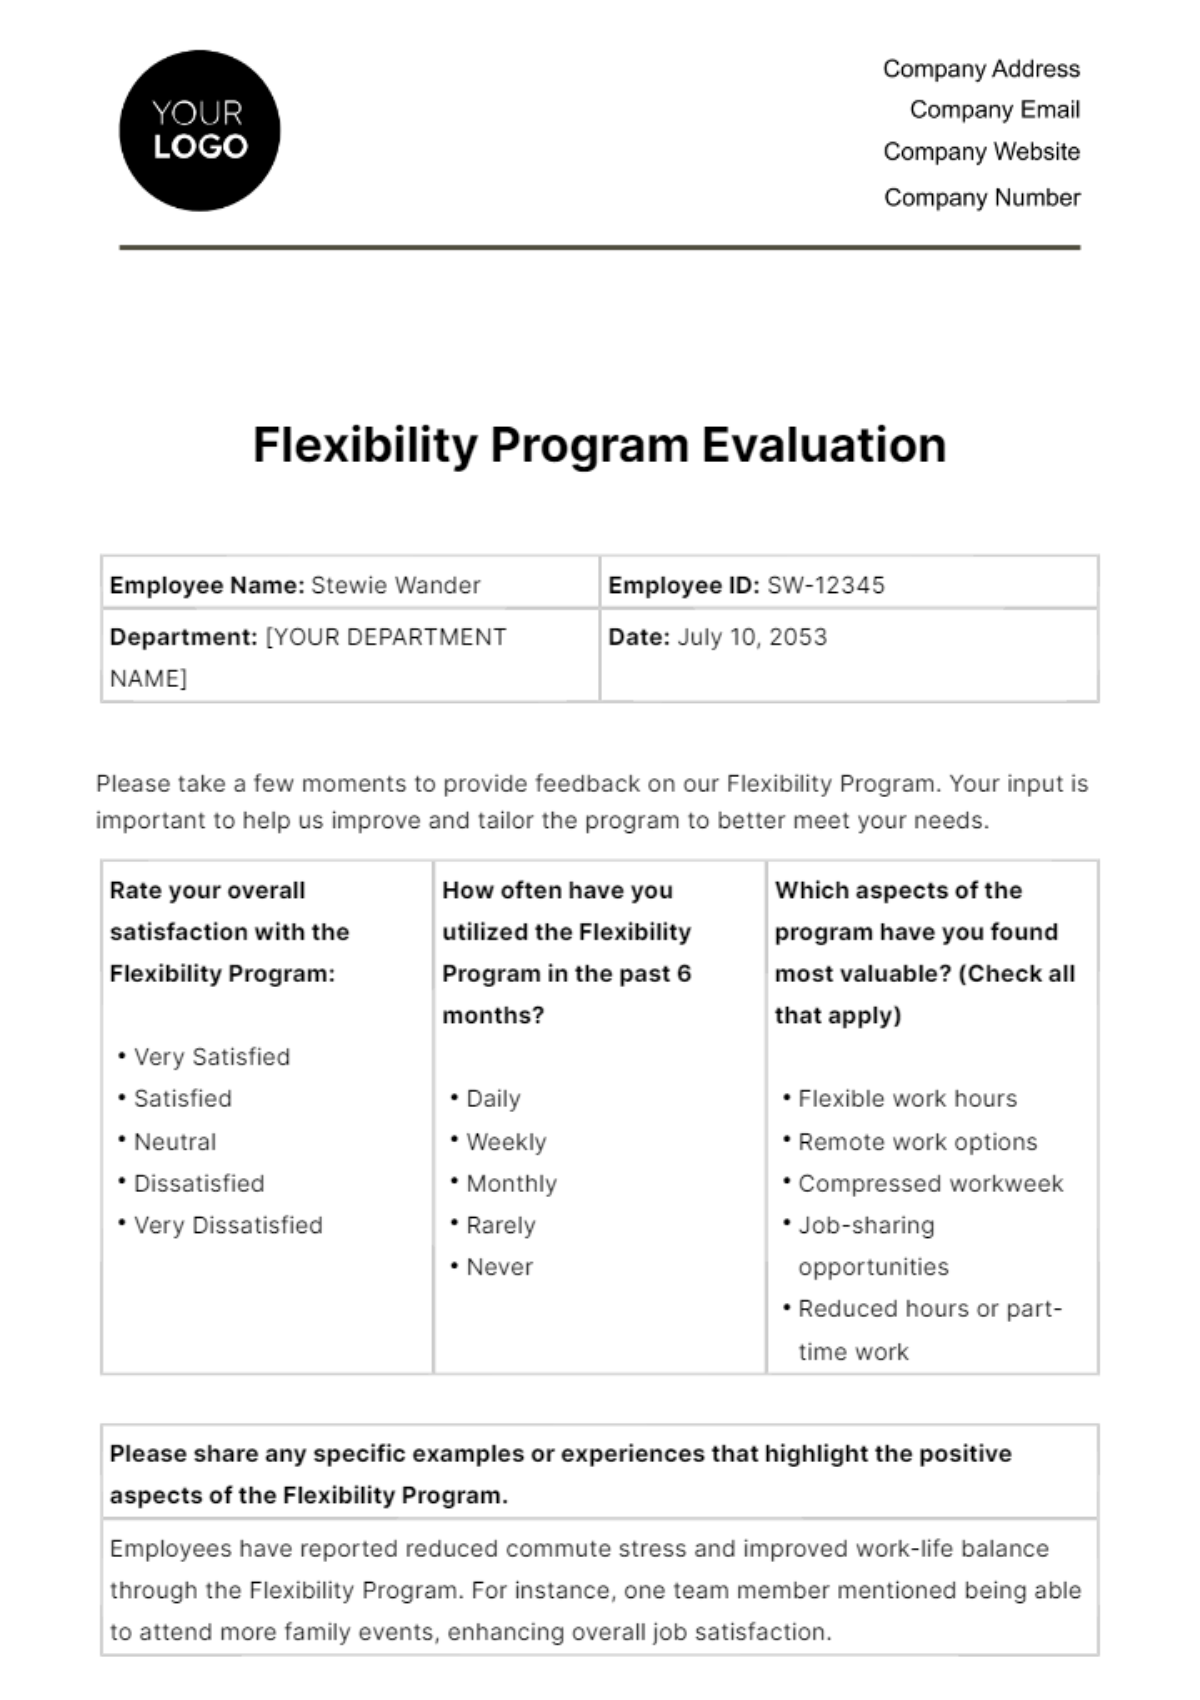 Flexibility Program Evaluation HR Template